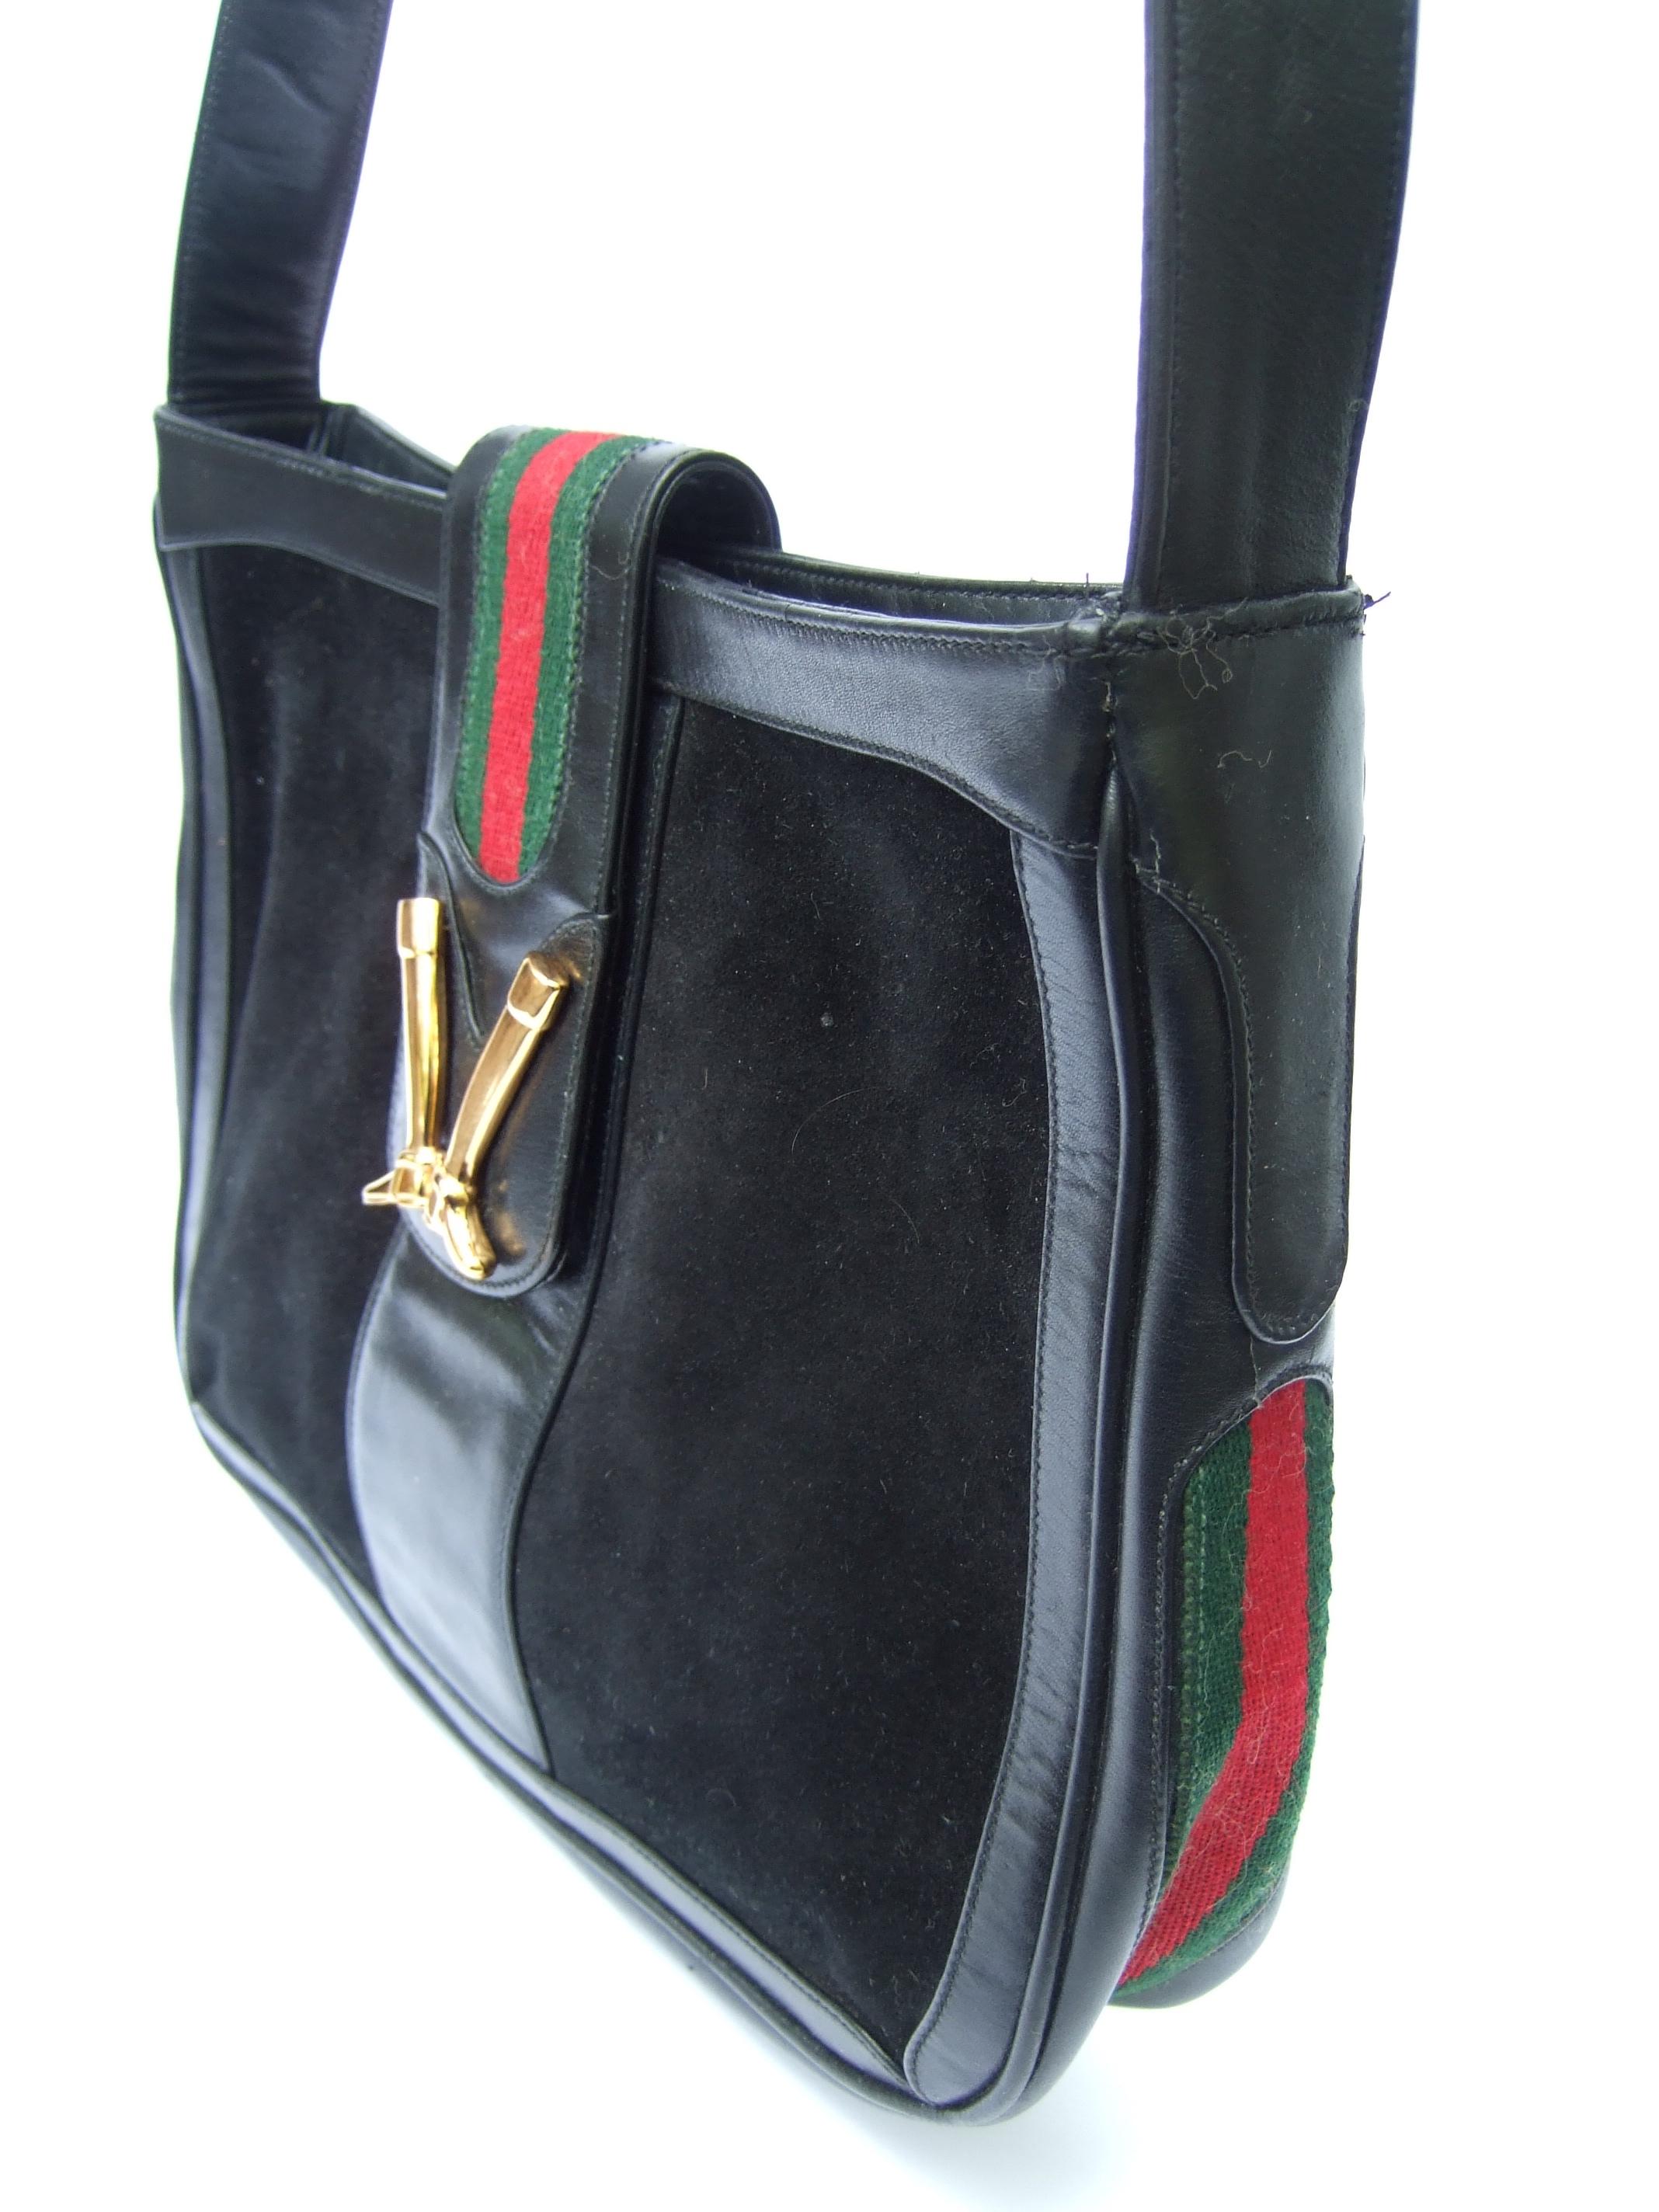 Gucci Italy Rare Black Suede Boot Emblem Shoulder Bag c 1970s For Sale 9